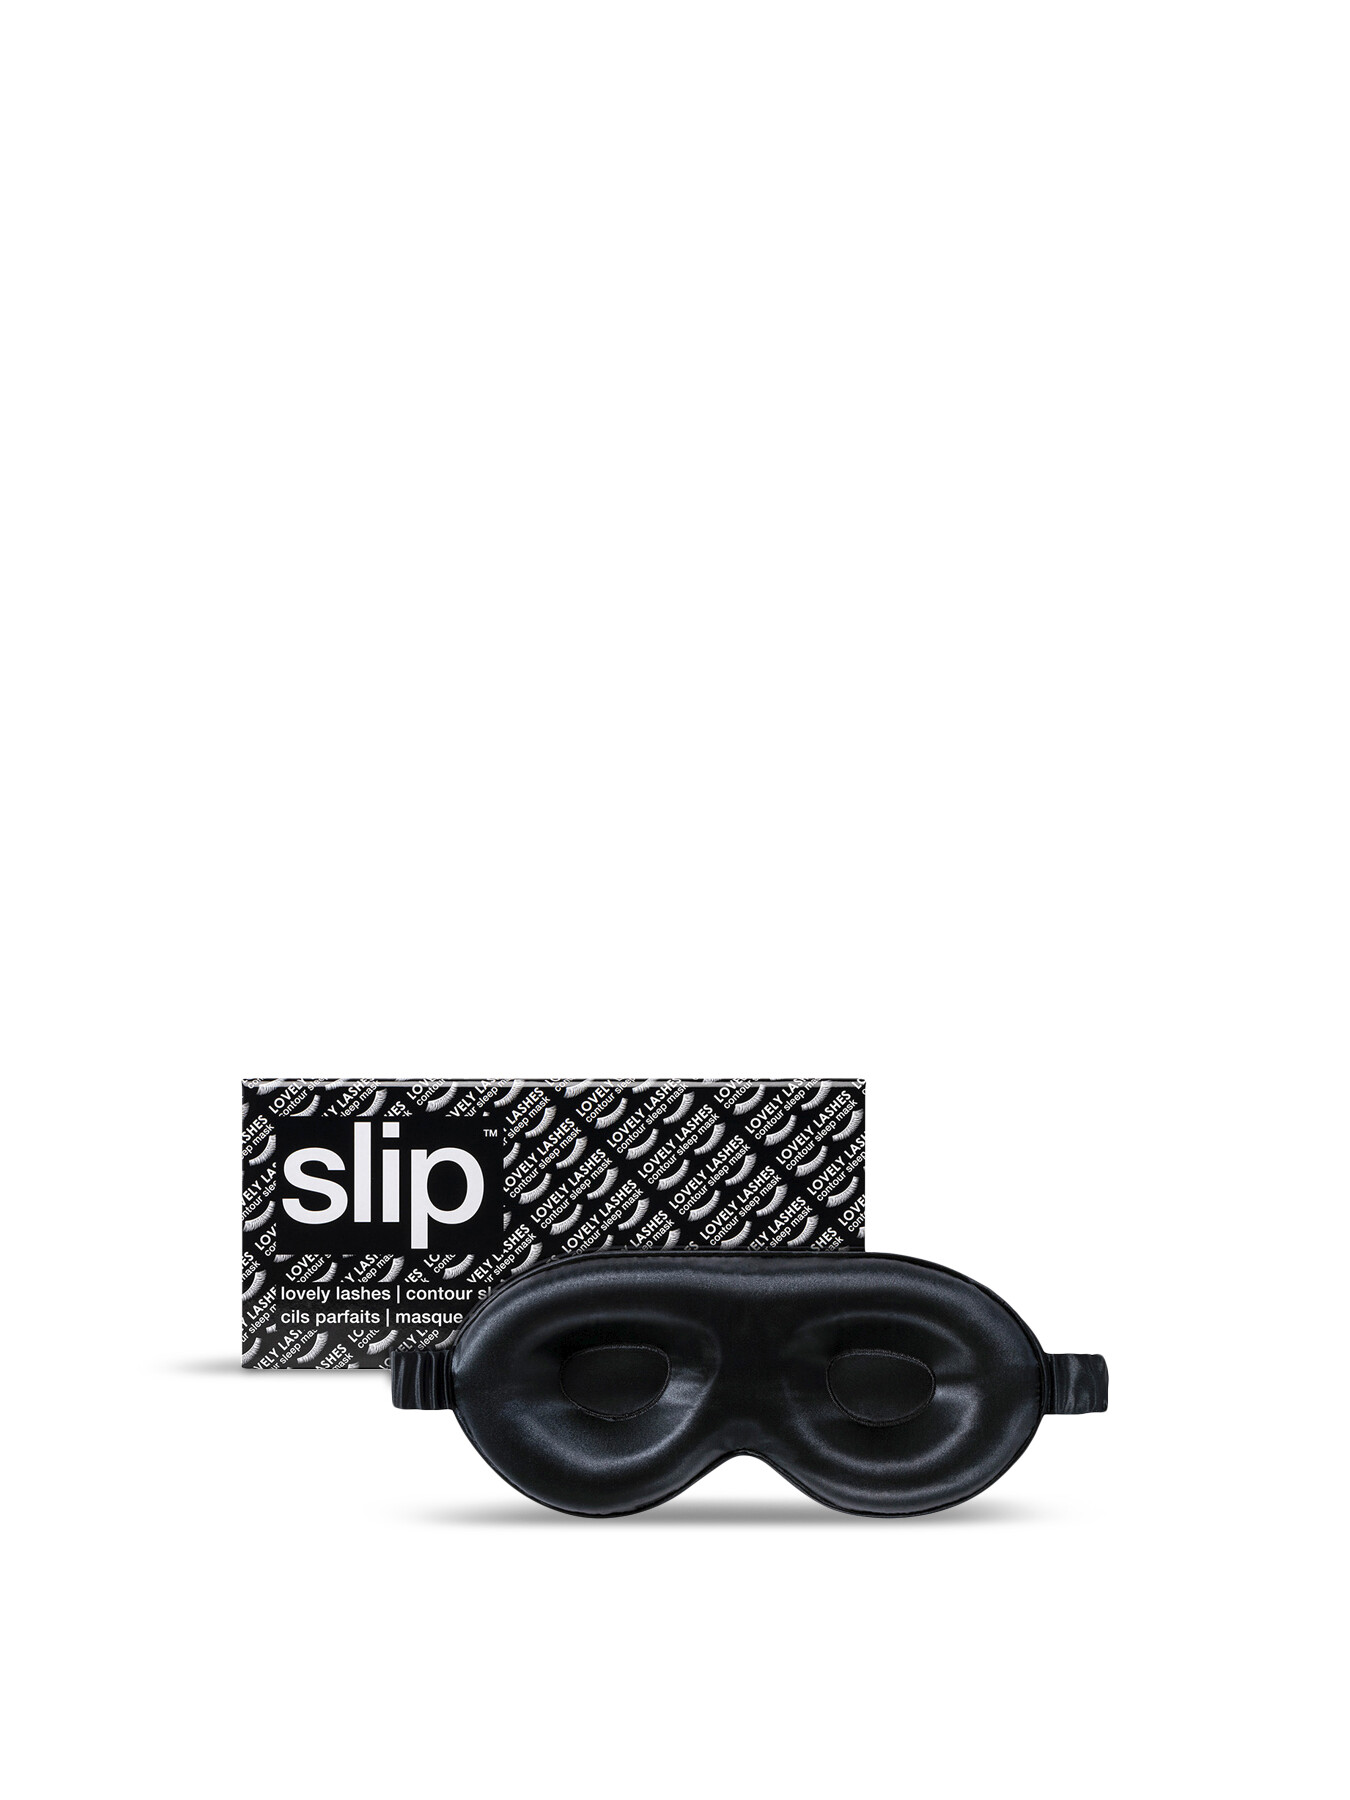 Slip Pure Silk Contour Sleep Mask In White